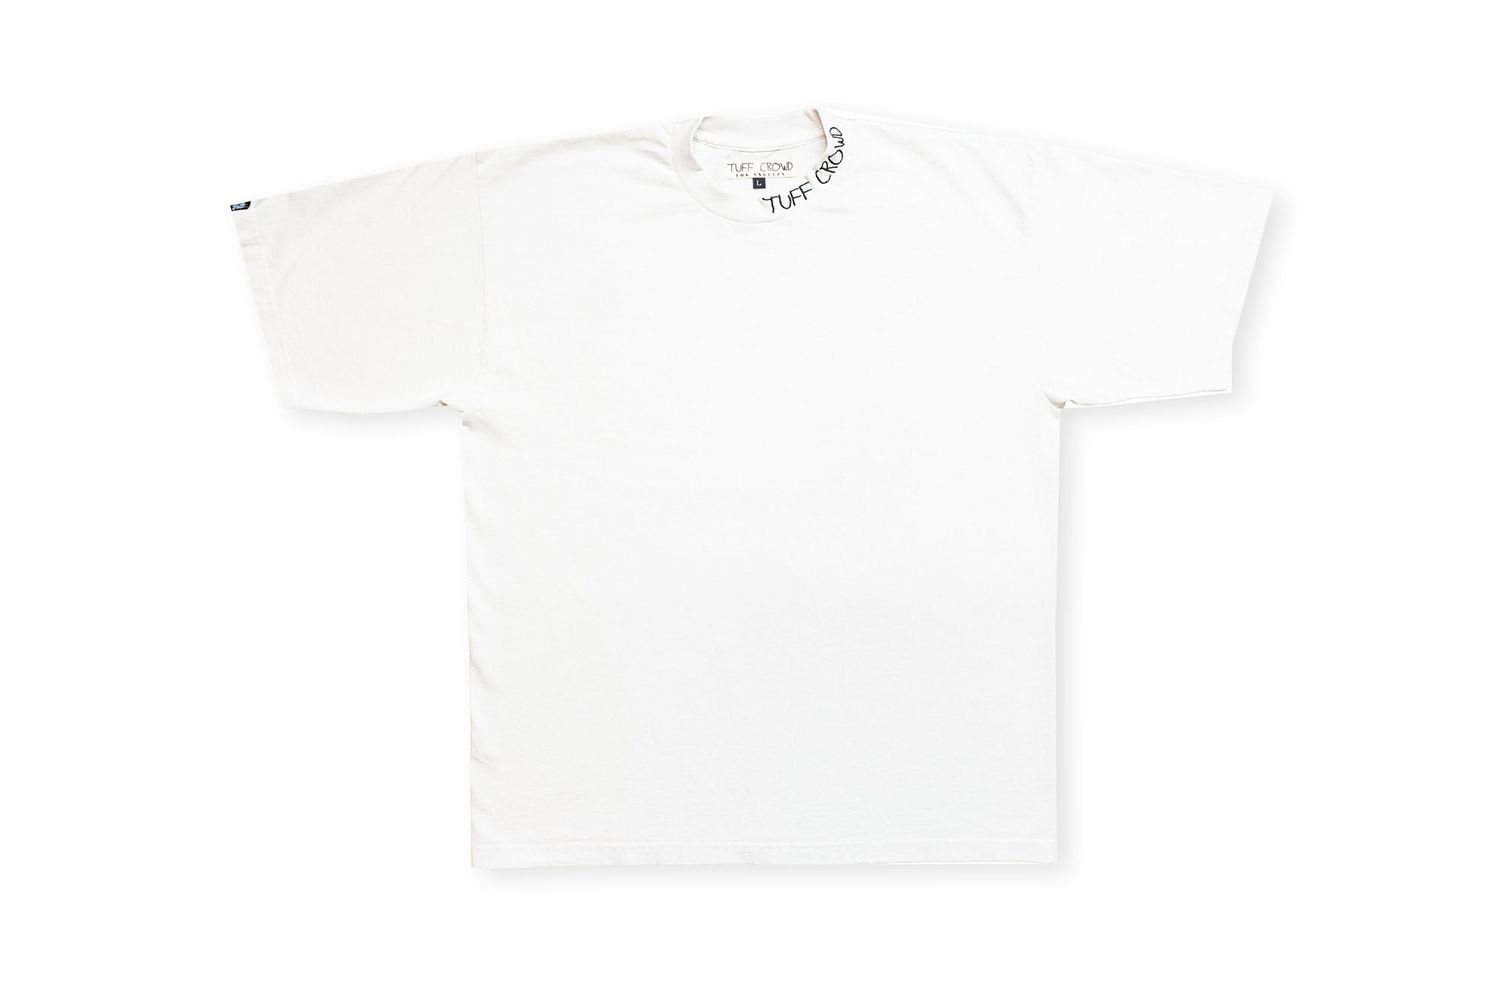 Tuff Crowd Vintage White T-Shirt